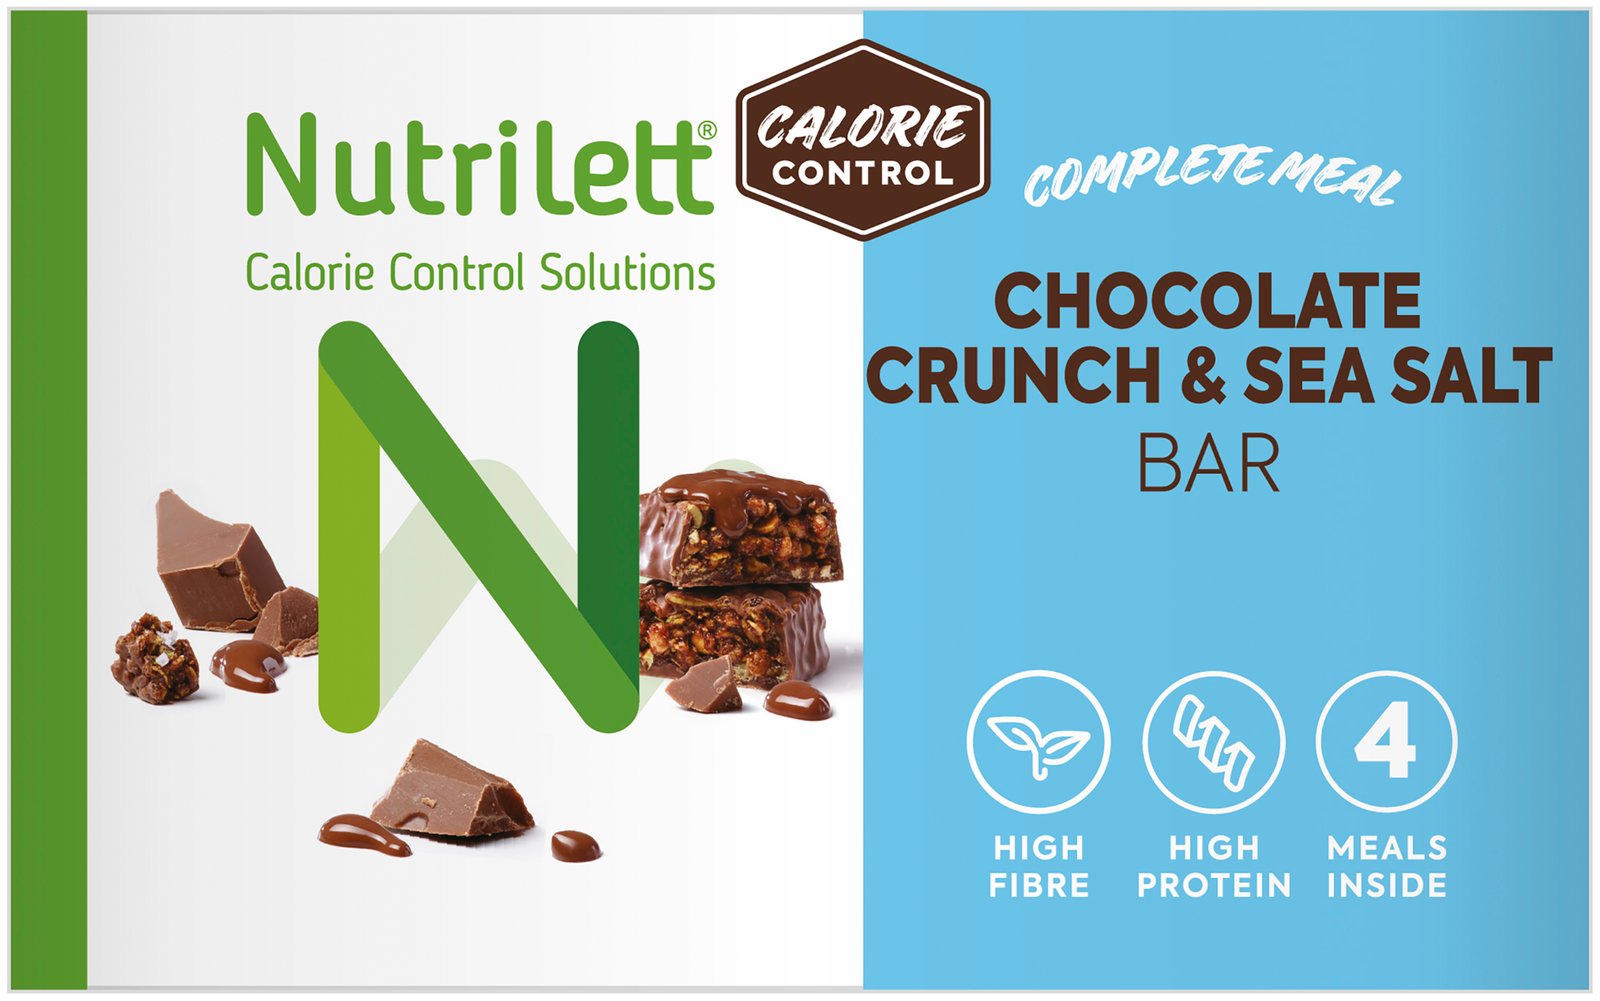 Nutrilett Chocolate Crunch & Sea Salt bar 4 st